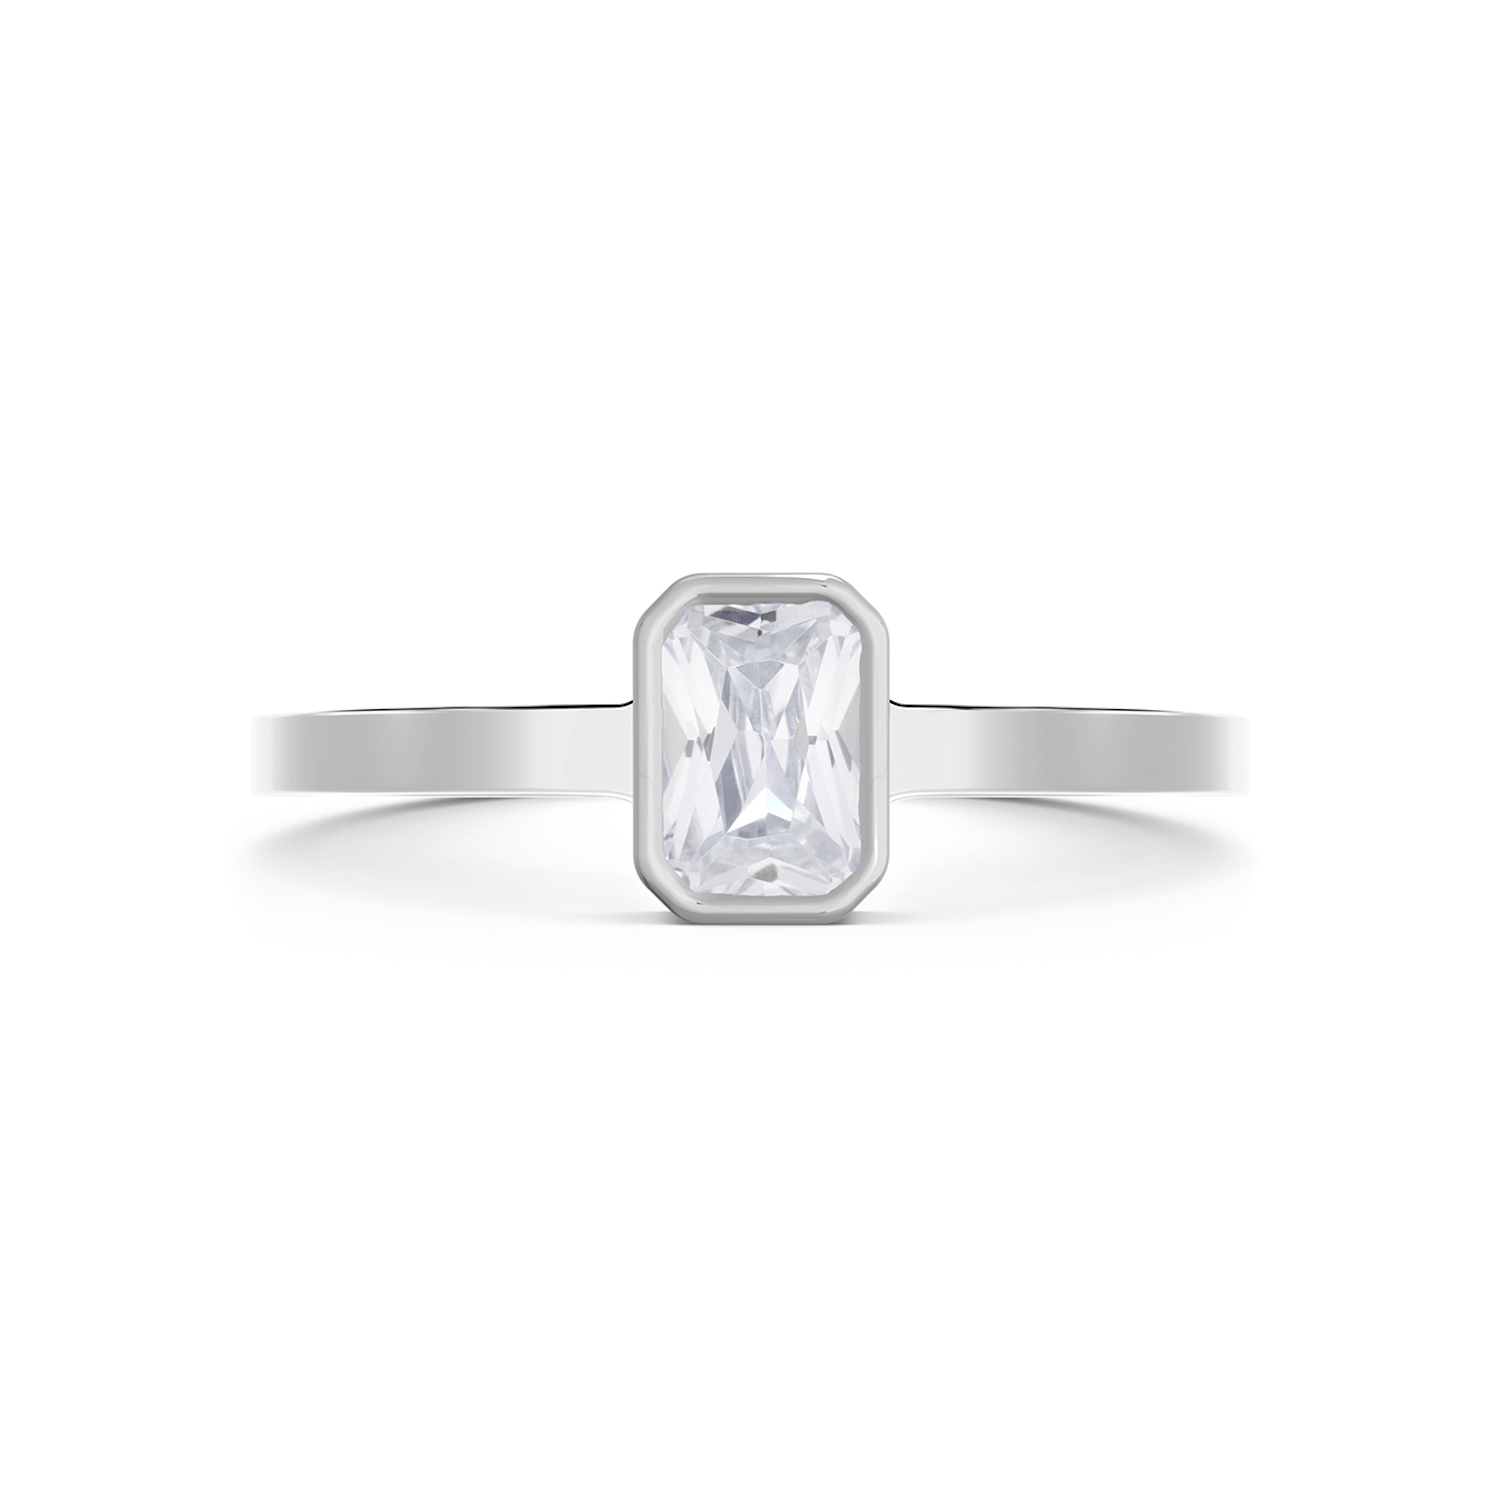 Thea Diamond Solitaire Ring. 18k White Gold or Platinum - MONARC CONCIERGE